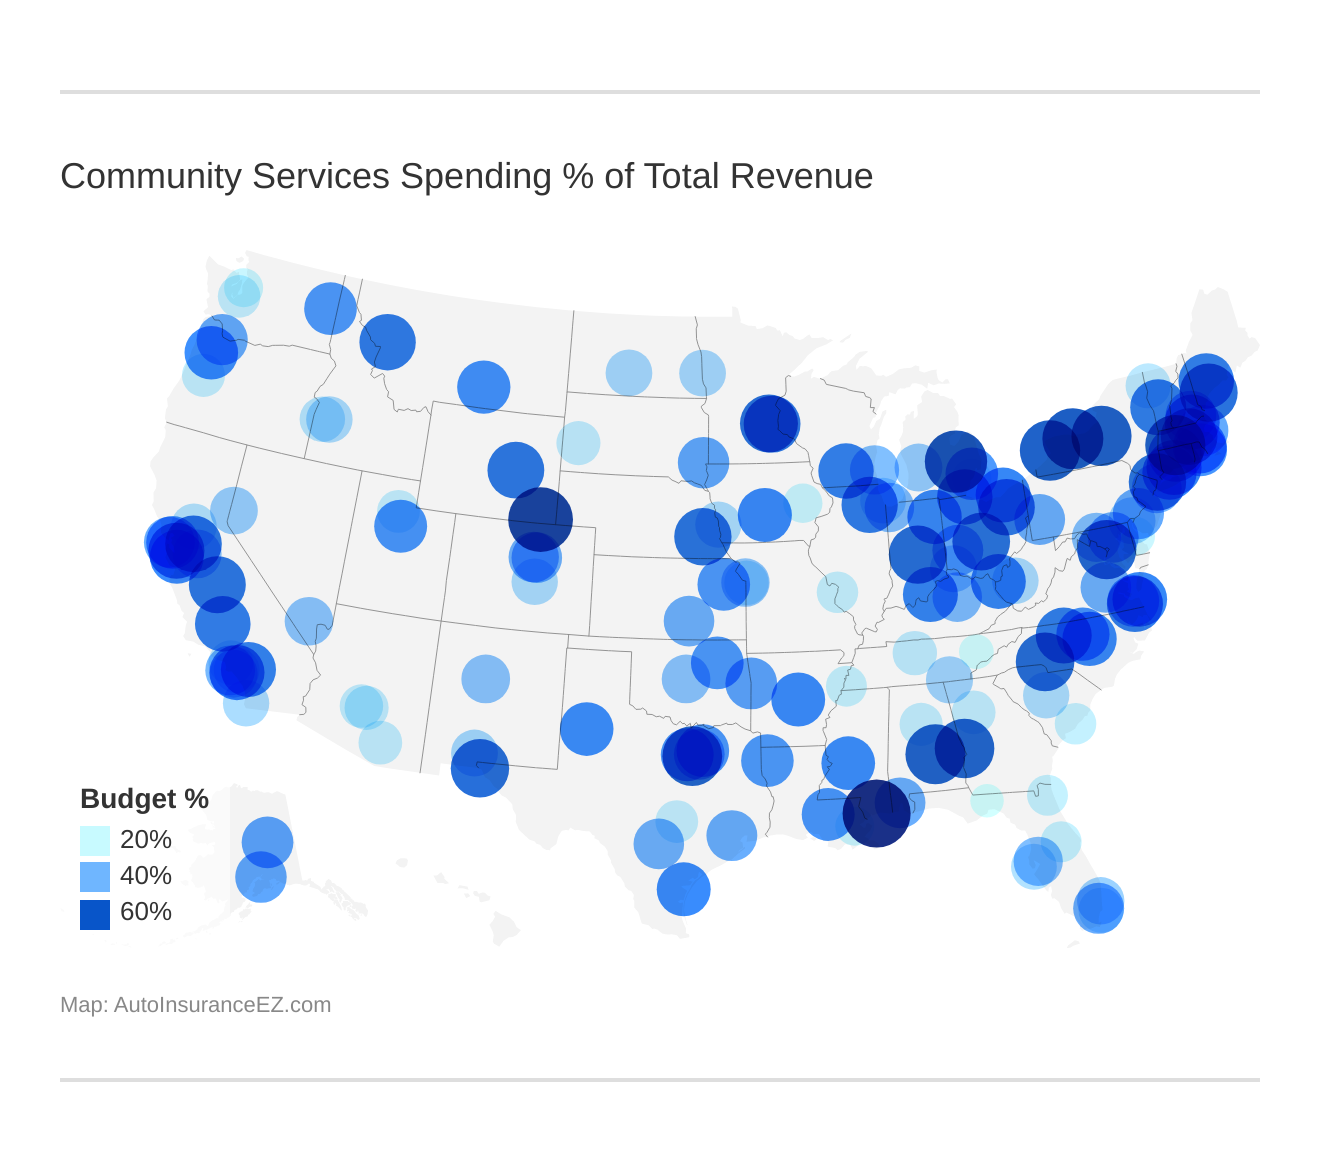 Community Services Spending % of Total Revenue